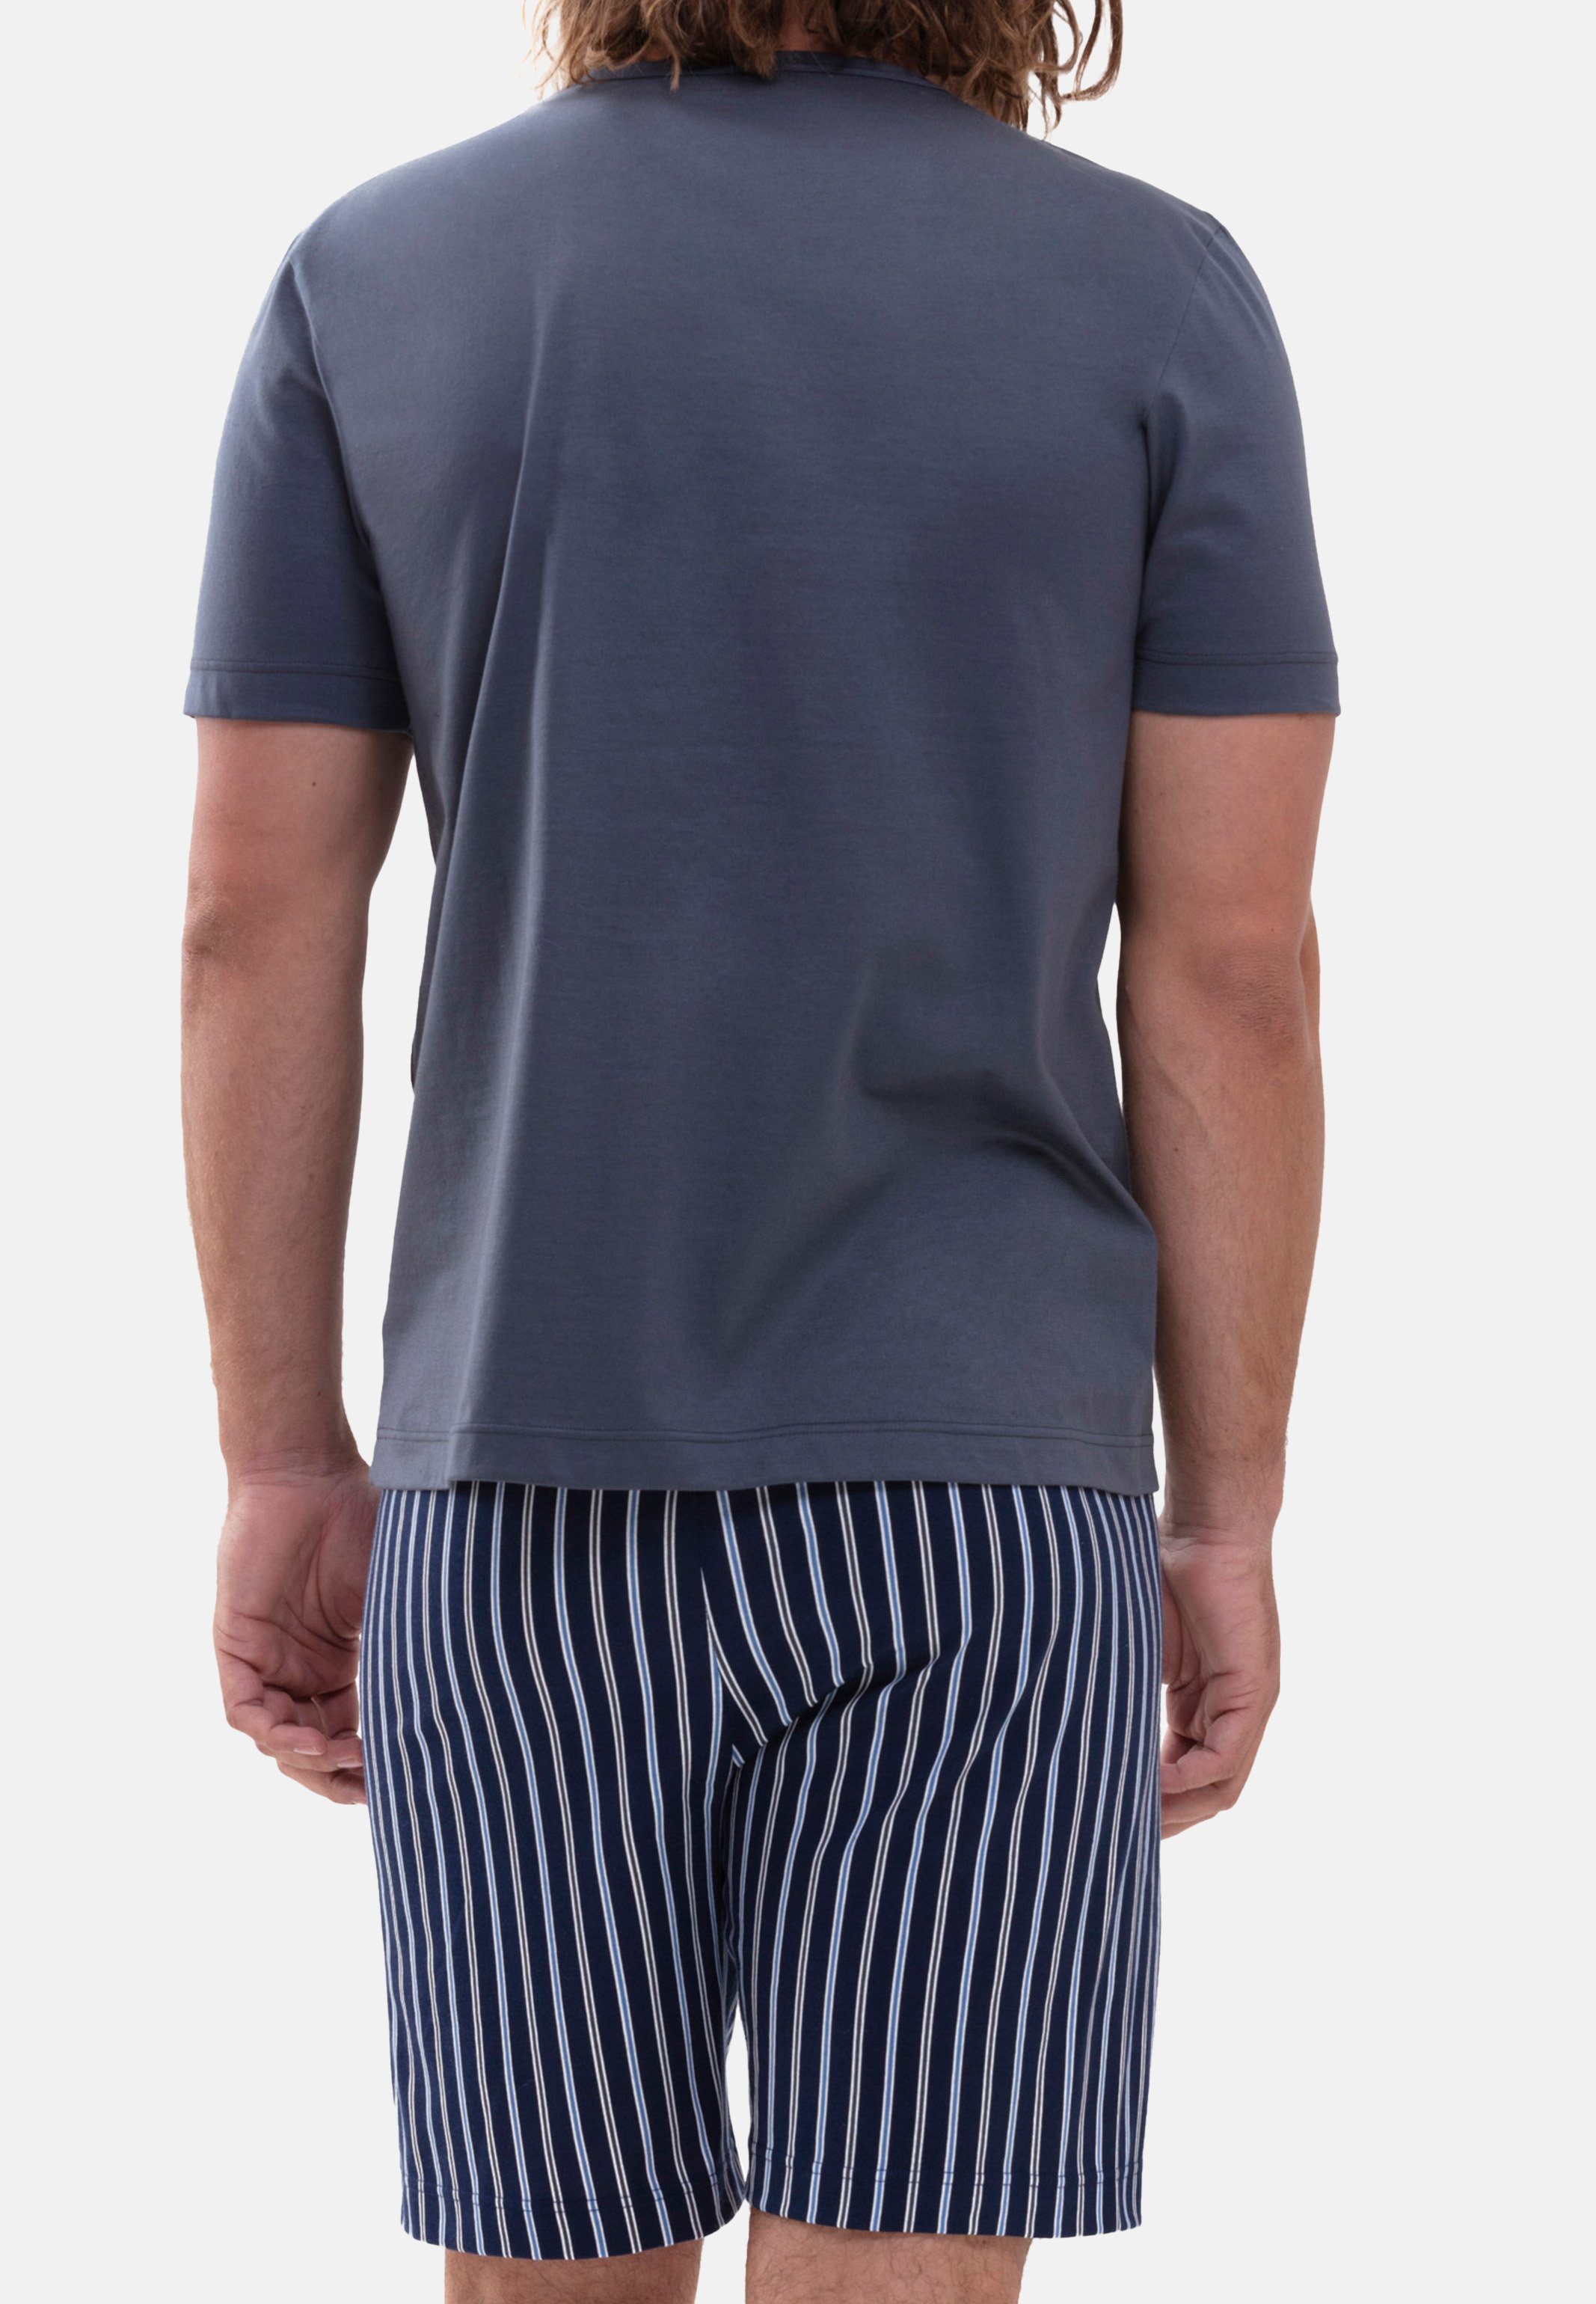 tlg) Soft Pyjama Mey - Baumwolle Schlafanzug grey (Set, Portimo - 2